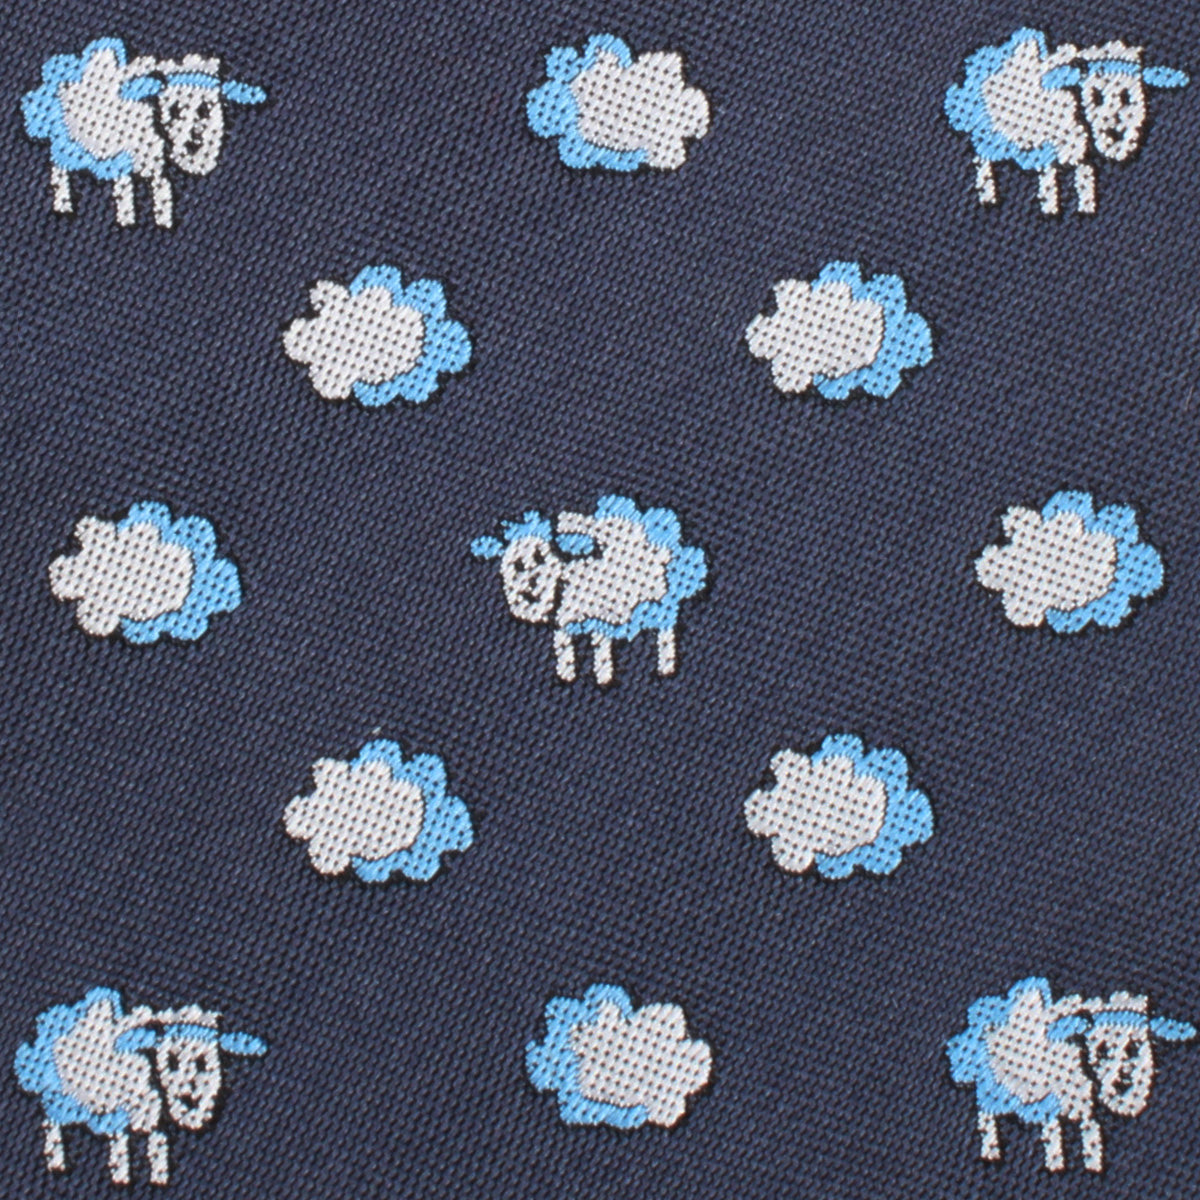 Sleepy Sheep Grey Kids Bow Tie Fabric